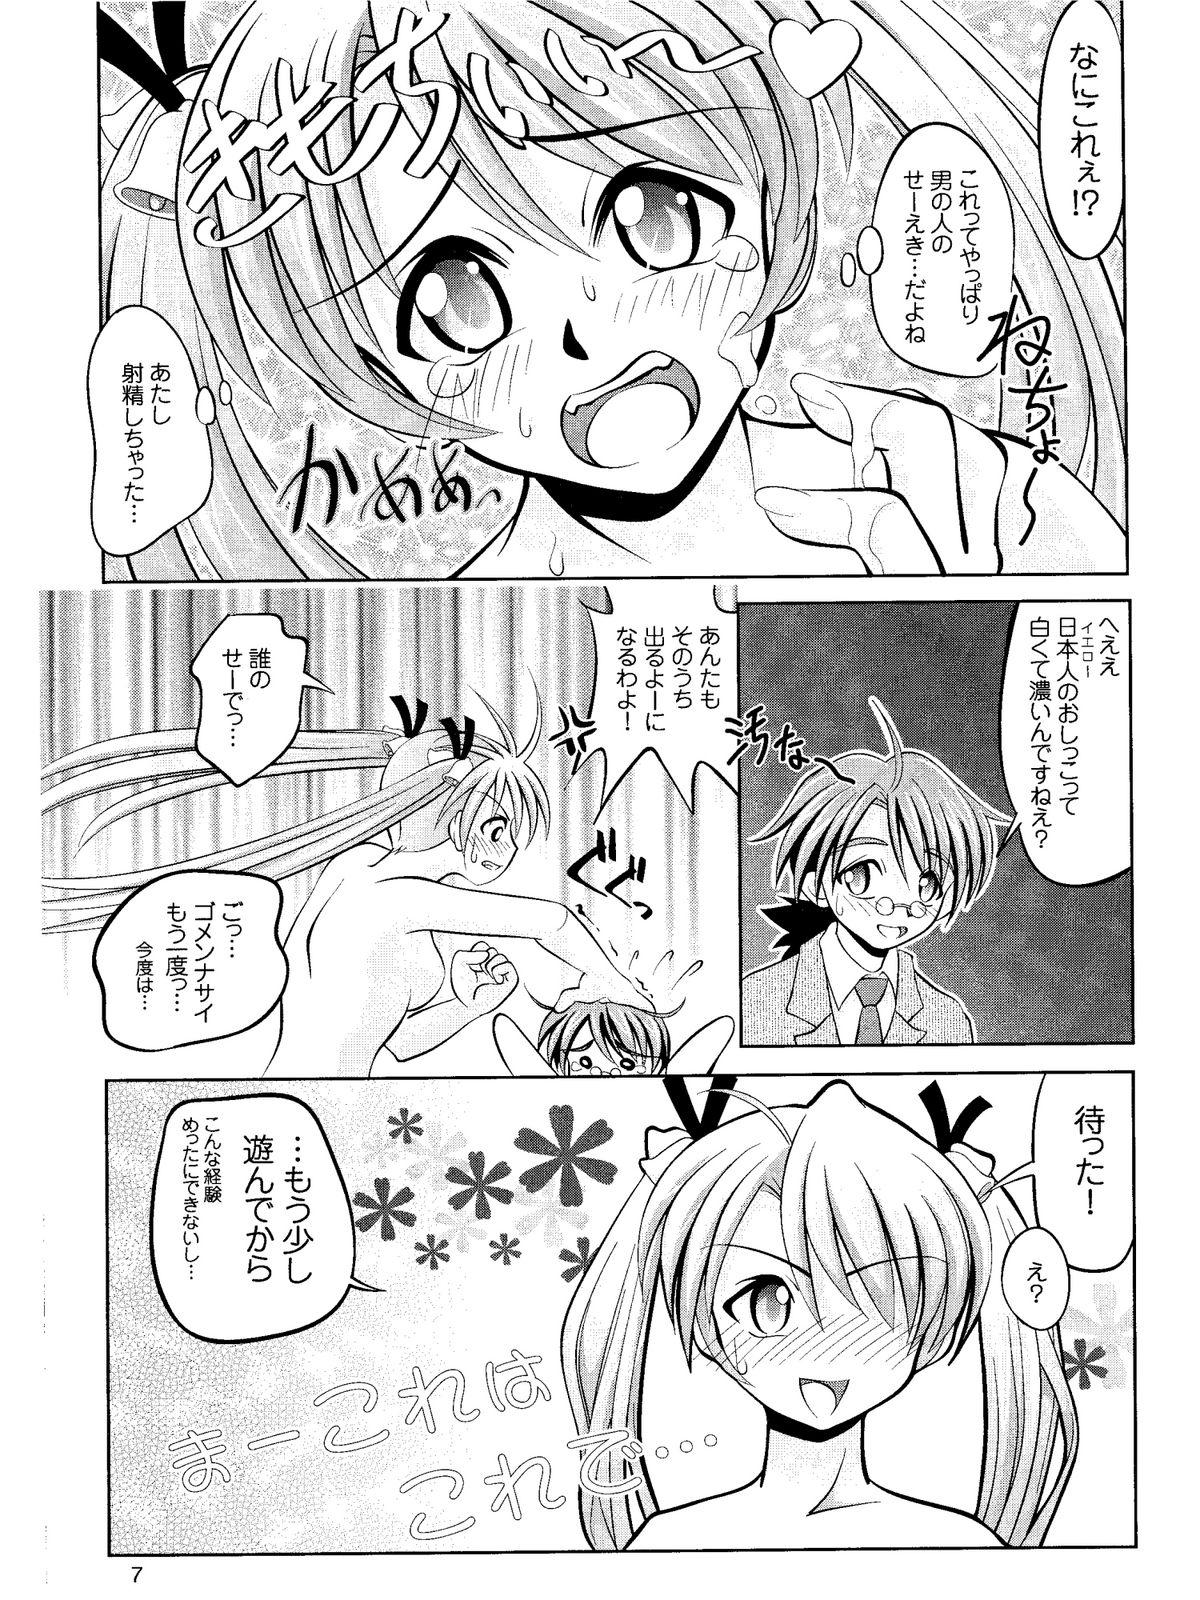 Strip Negima - Not Harry Potter - Mahou sensei negima Publico - Page 7